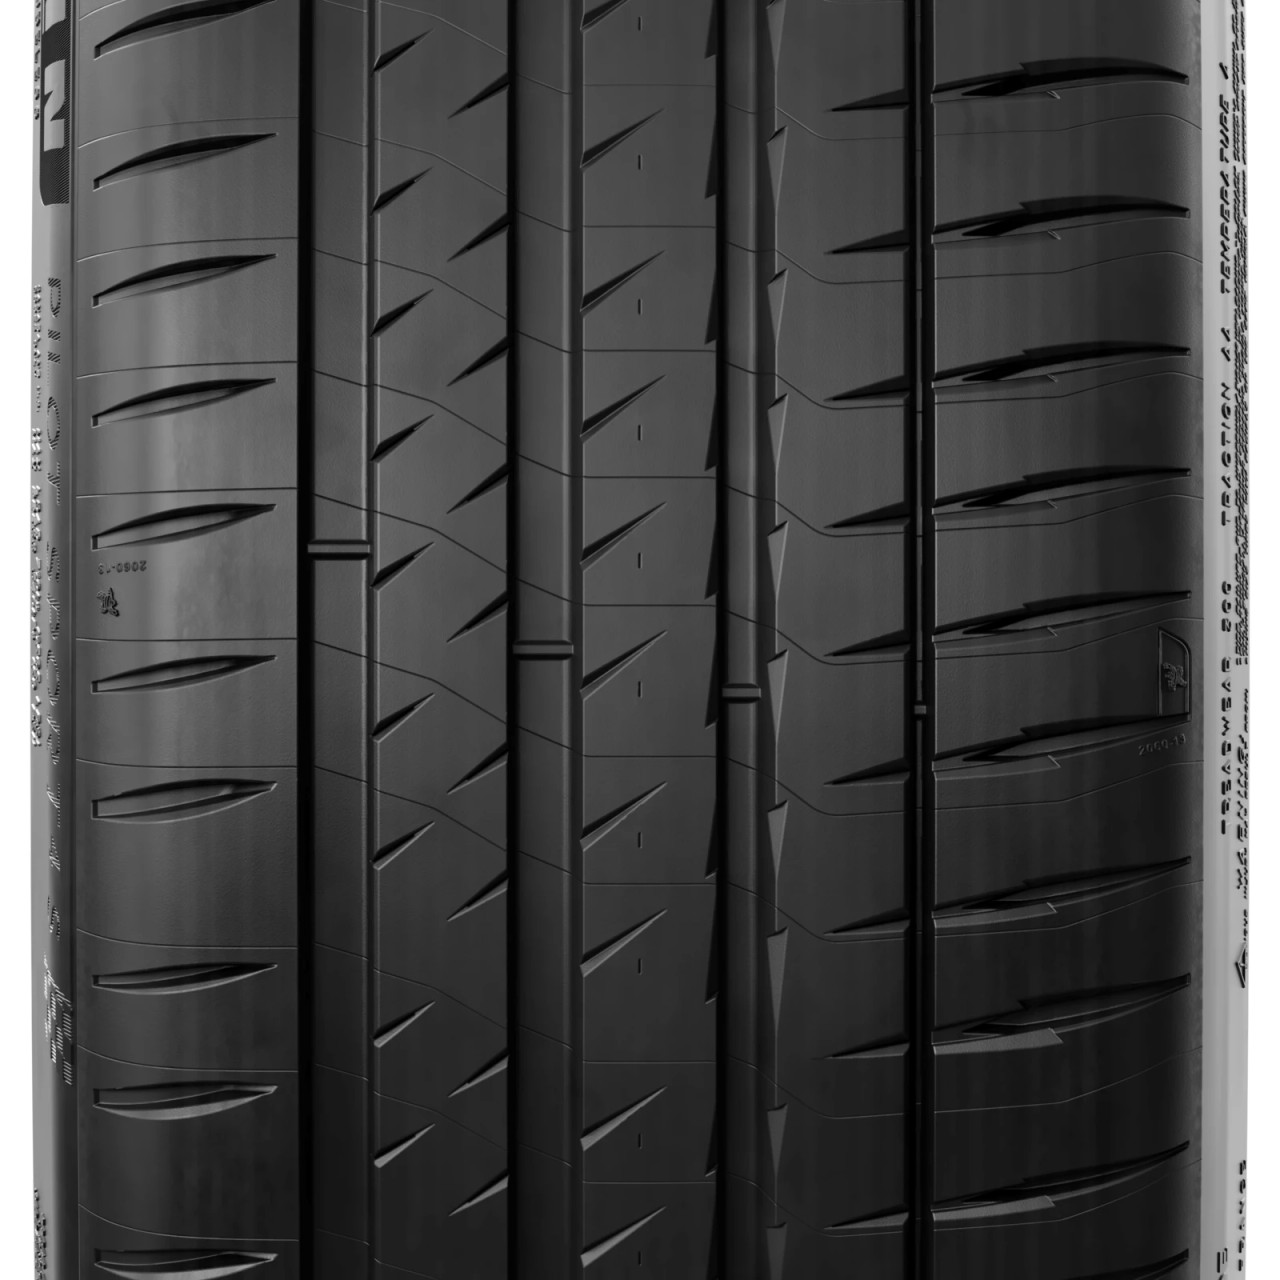 Michelin Pilot Sport 4S 265/35ZR19 (98Y) XL Tire